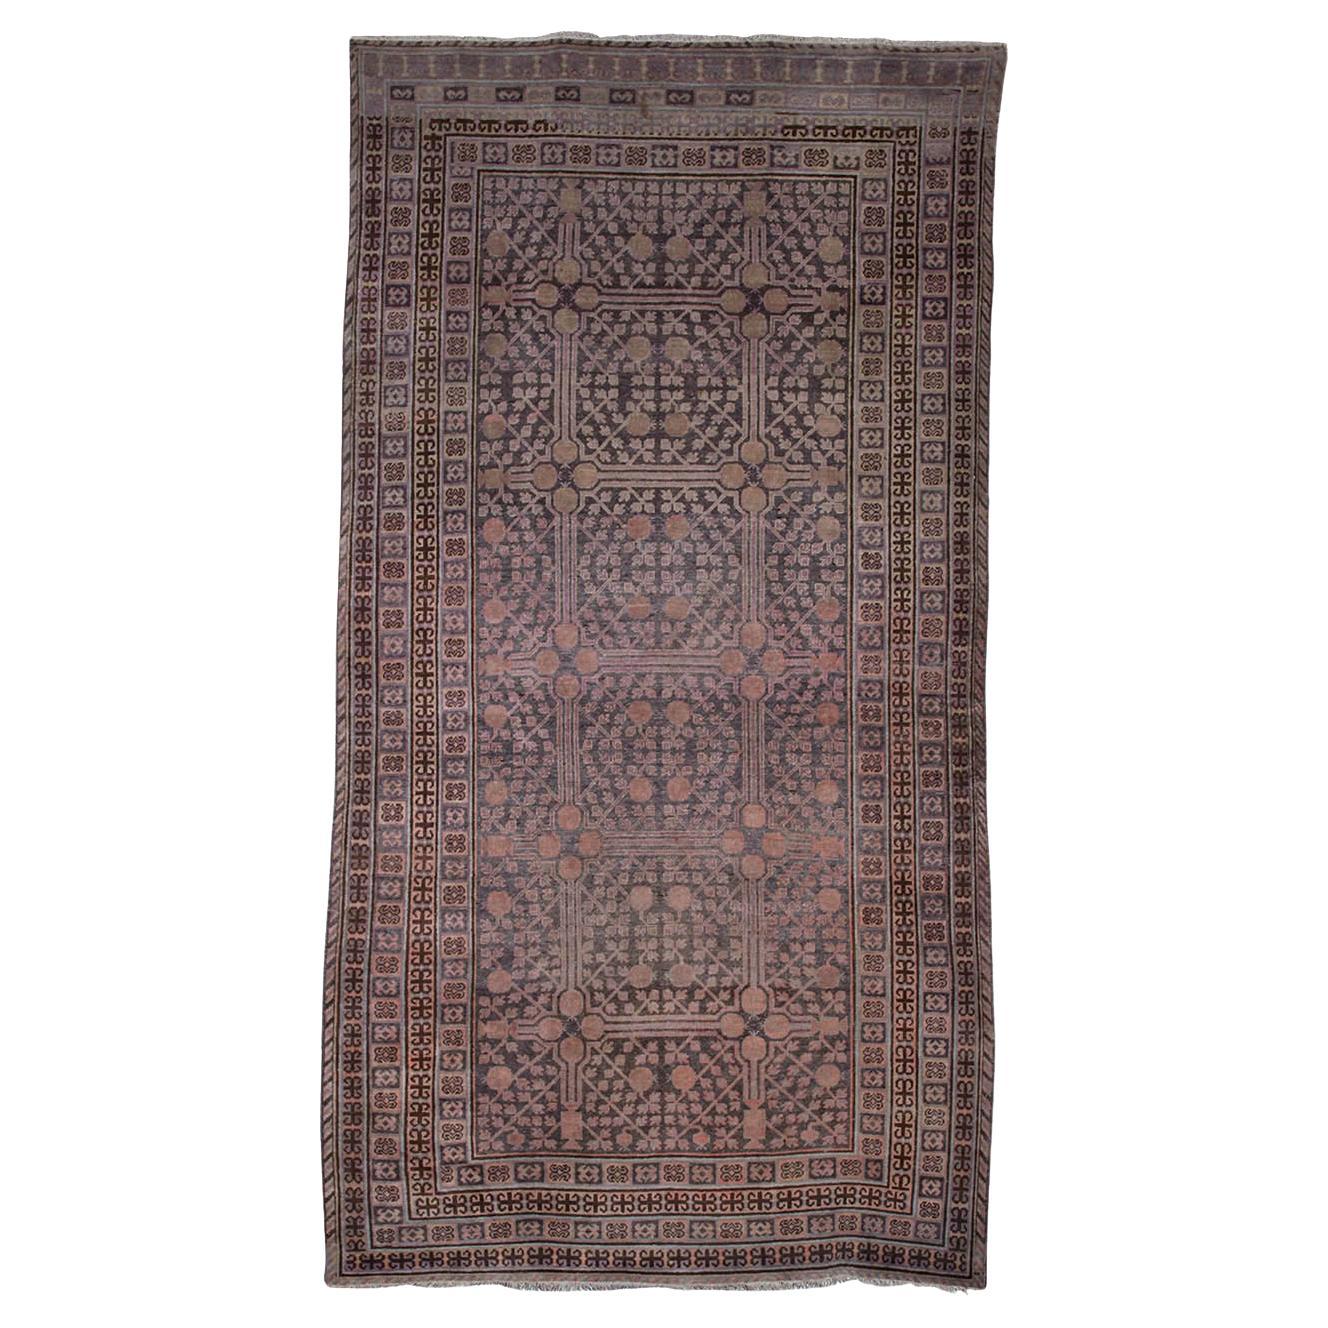 Rare Antique Kothan Carpet or Rug